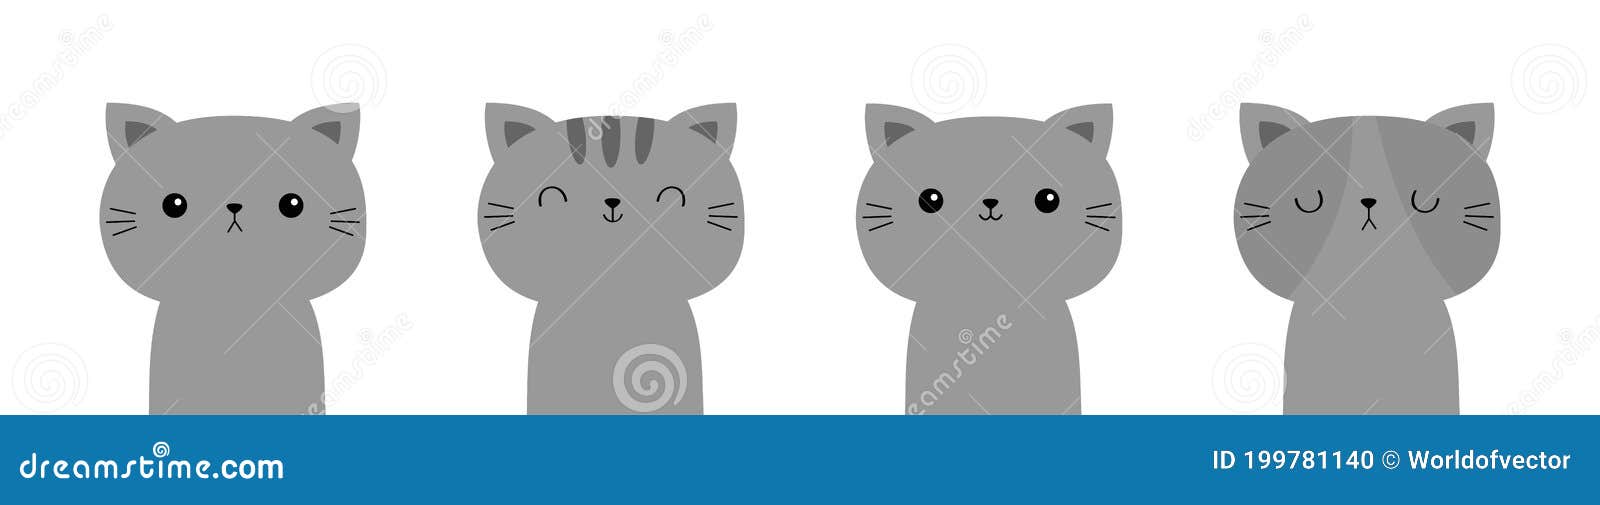 Funny Cats Clipart Cute Cat Clip Art Kawaii Kitten Kitty Icons 